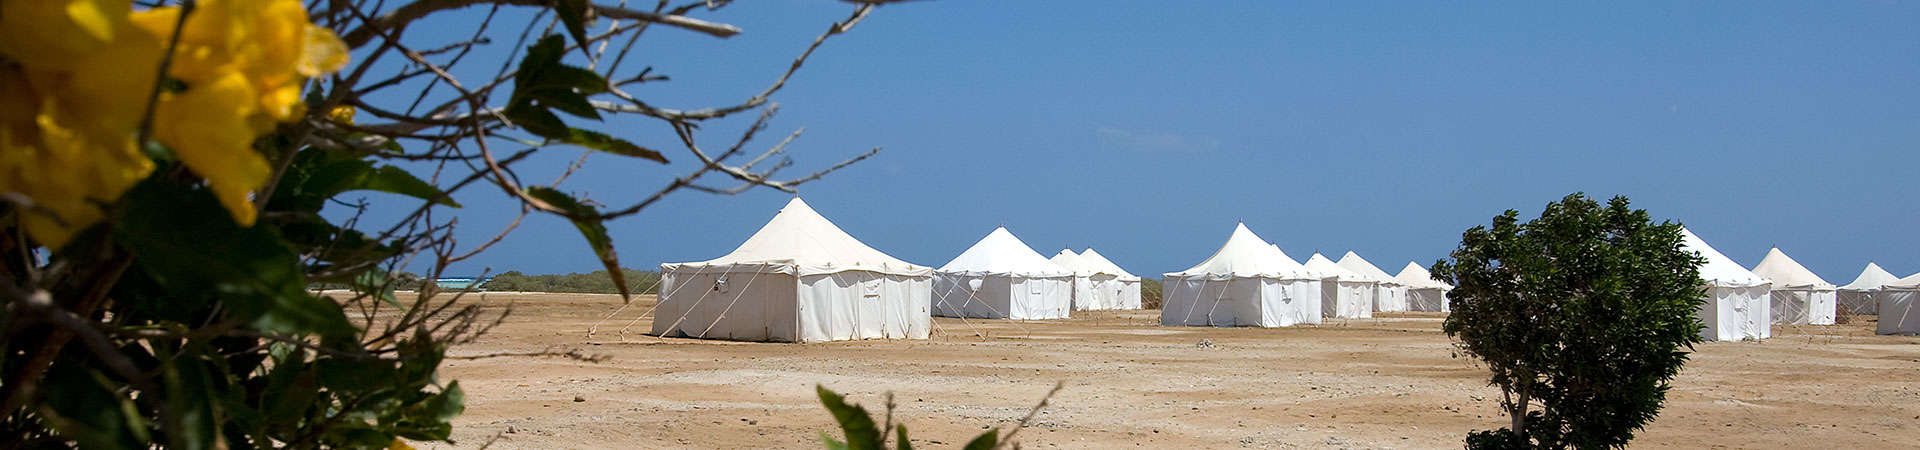 Ägpten Kitecamp Royal Tents